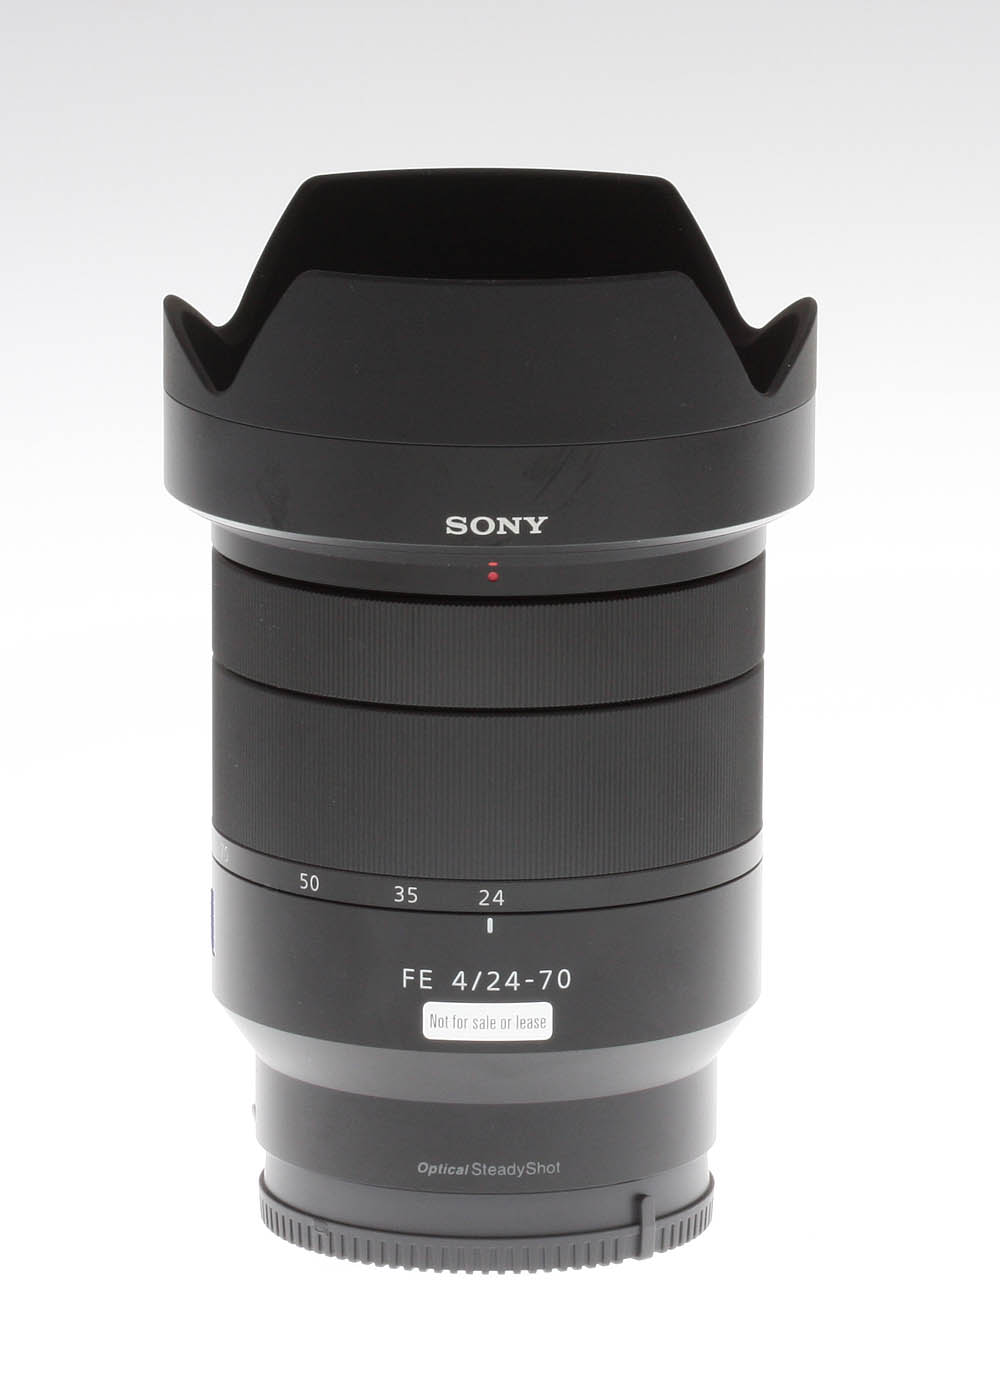 Sony Fe Lens Firmware Update